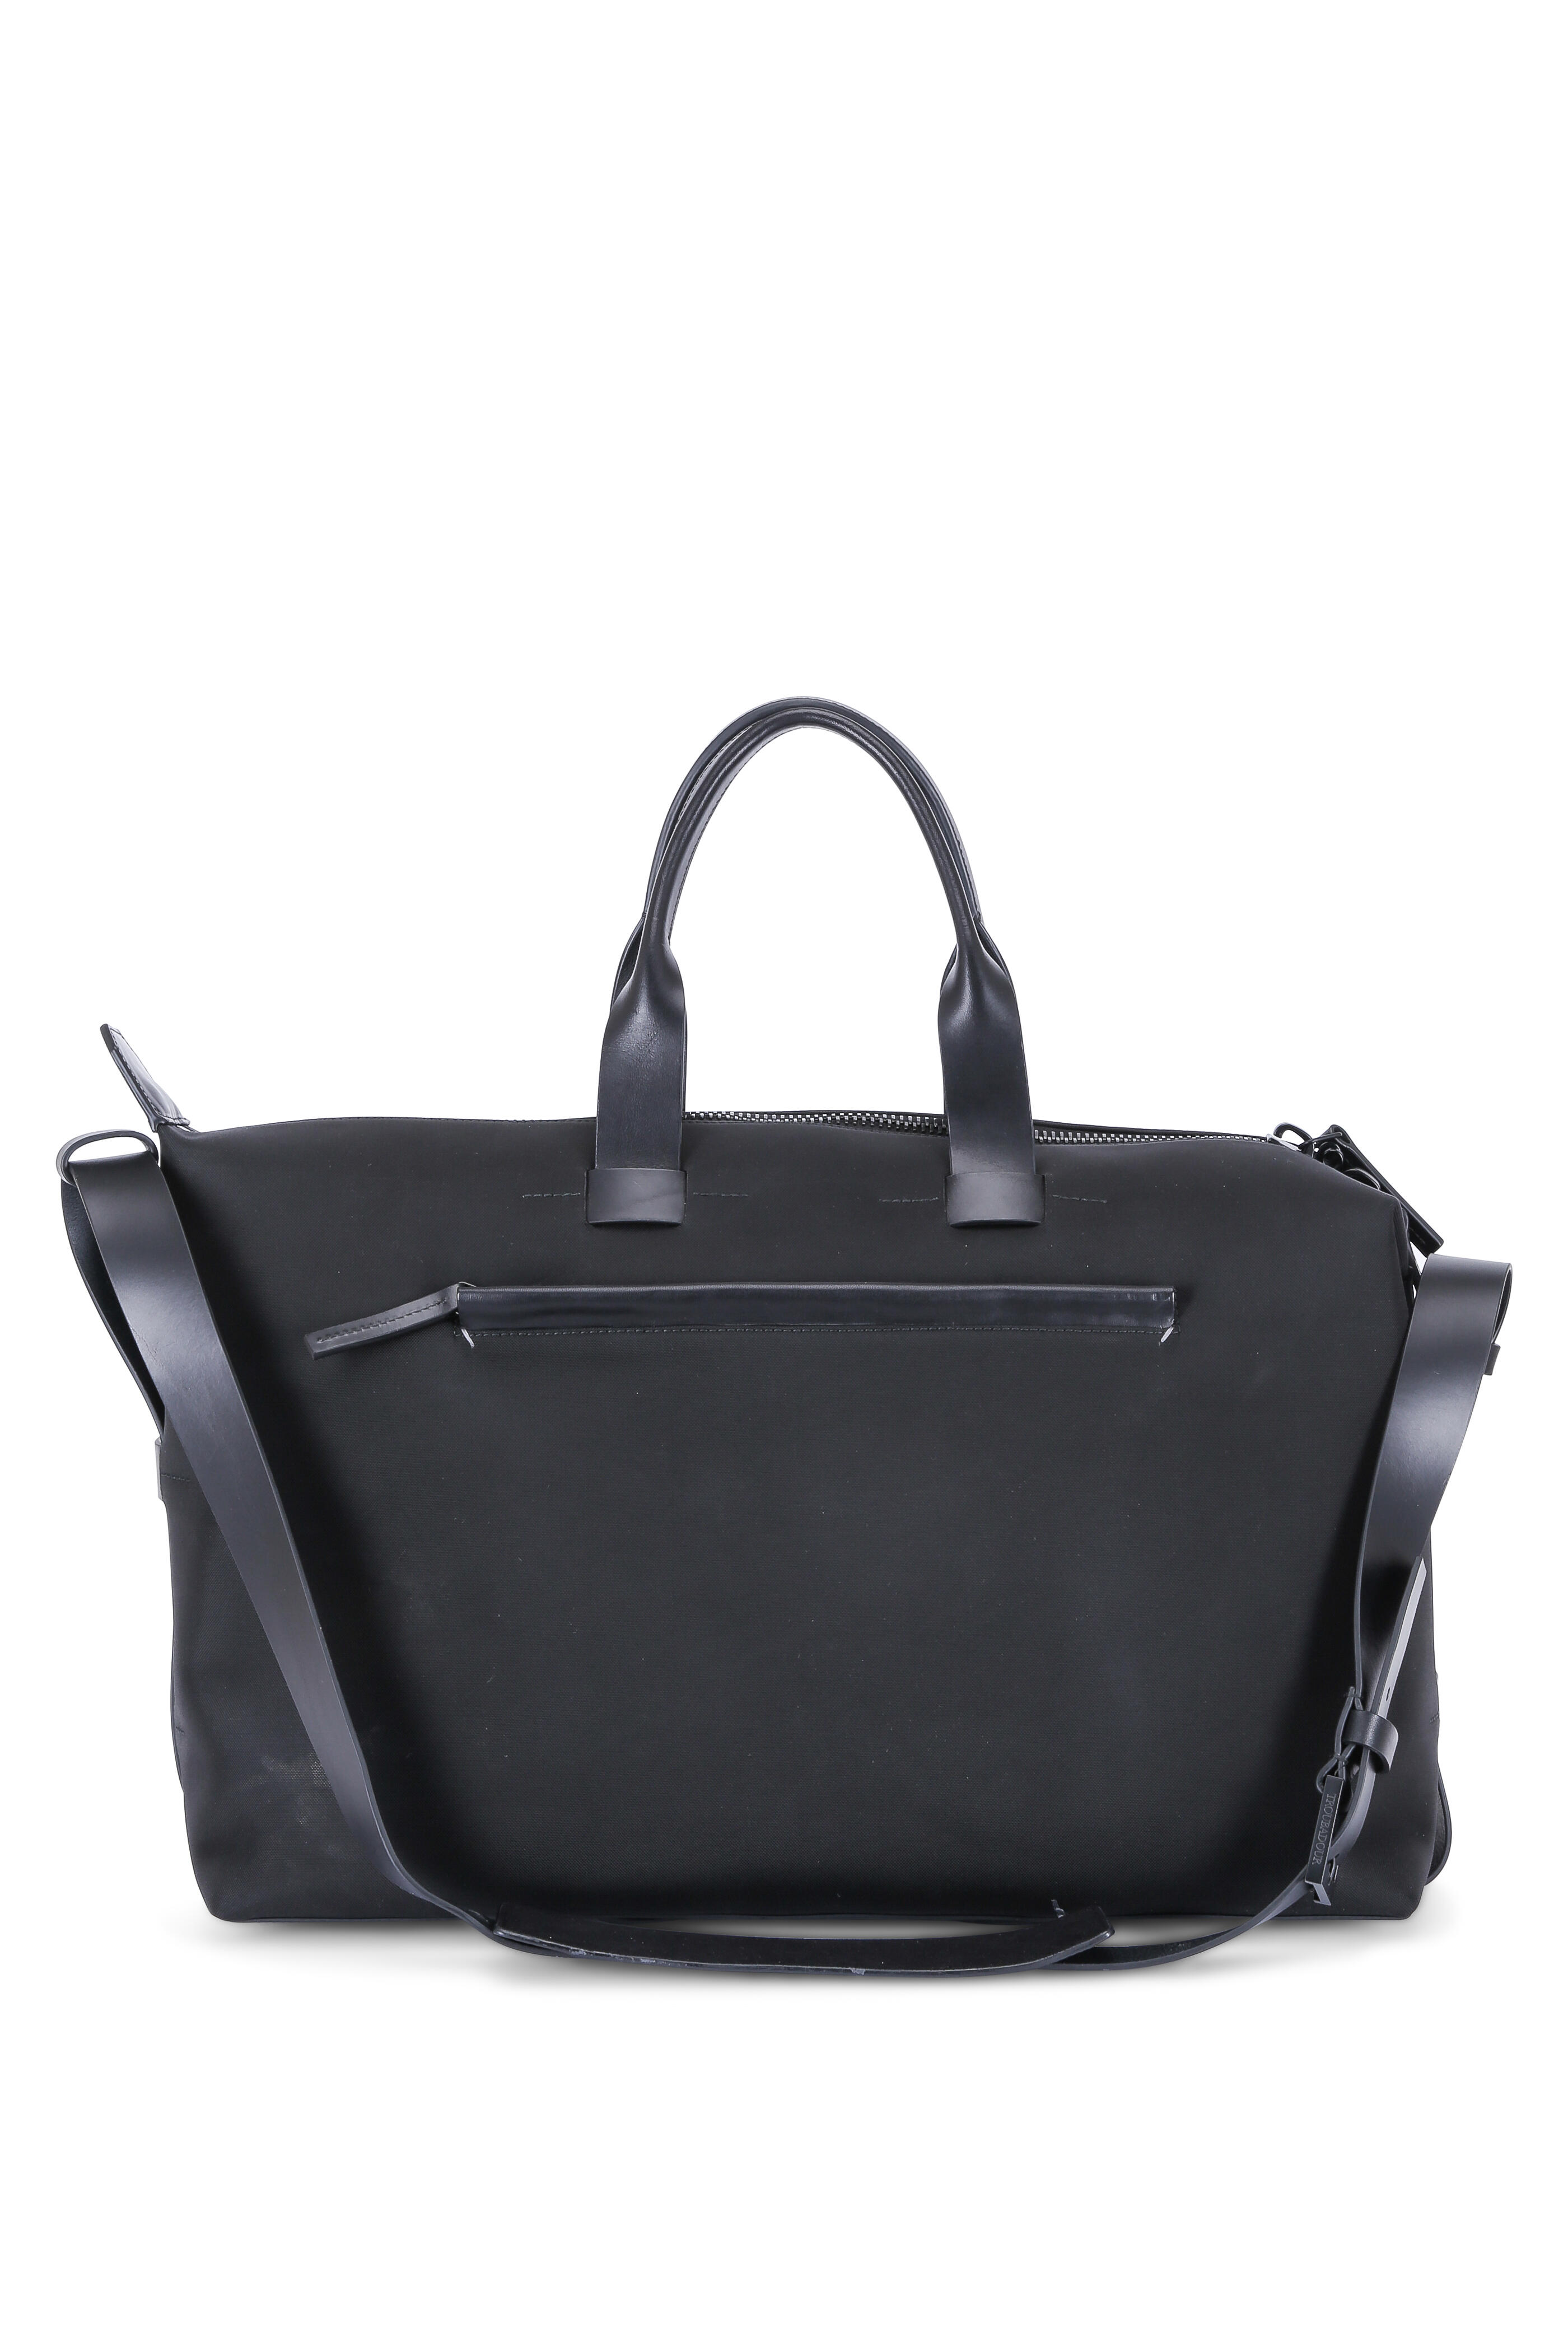 Troubadour - Black Nylon & Leather Weekender Bag